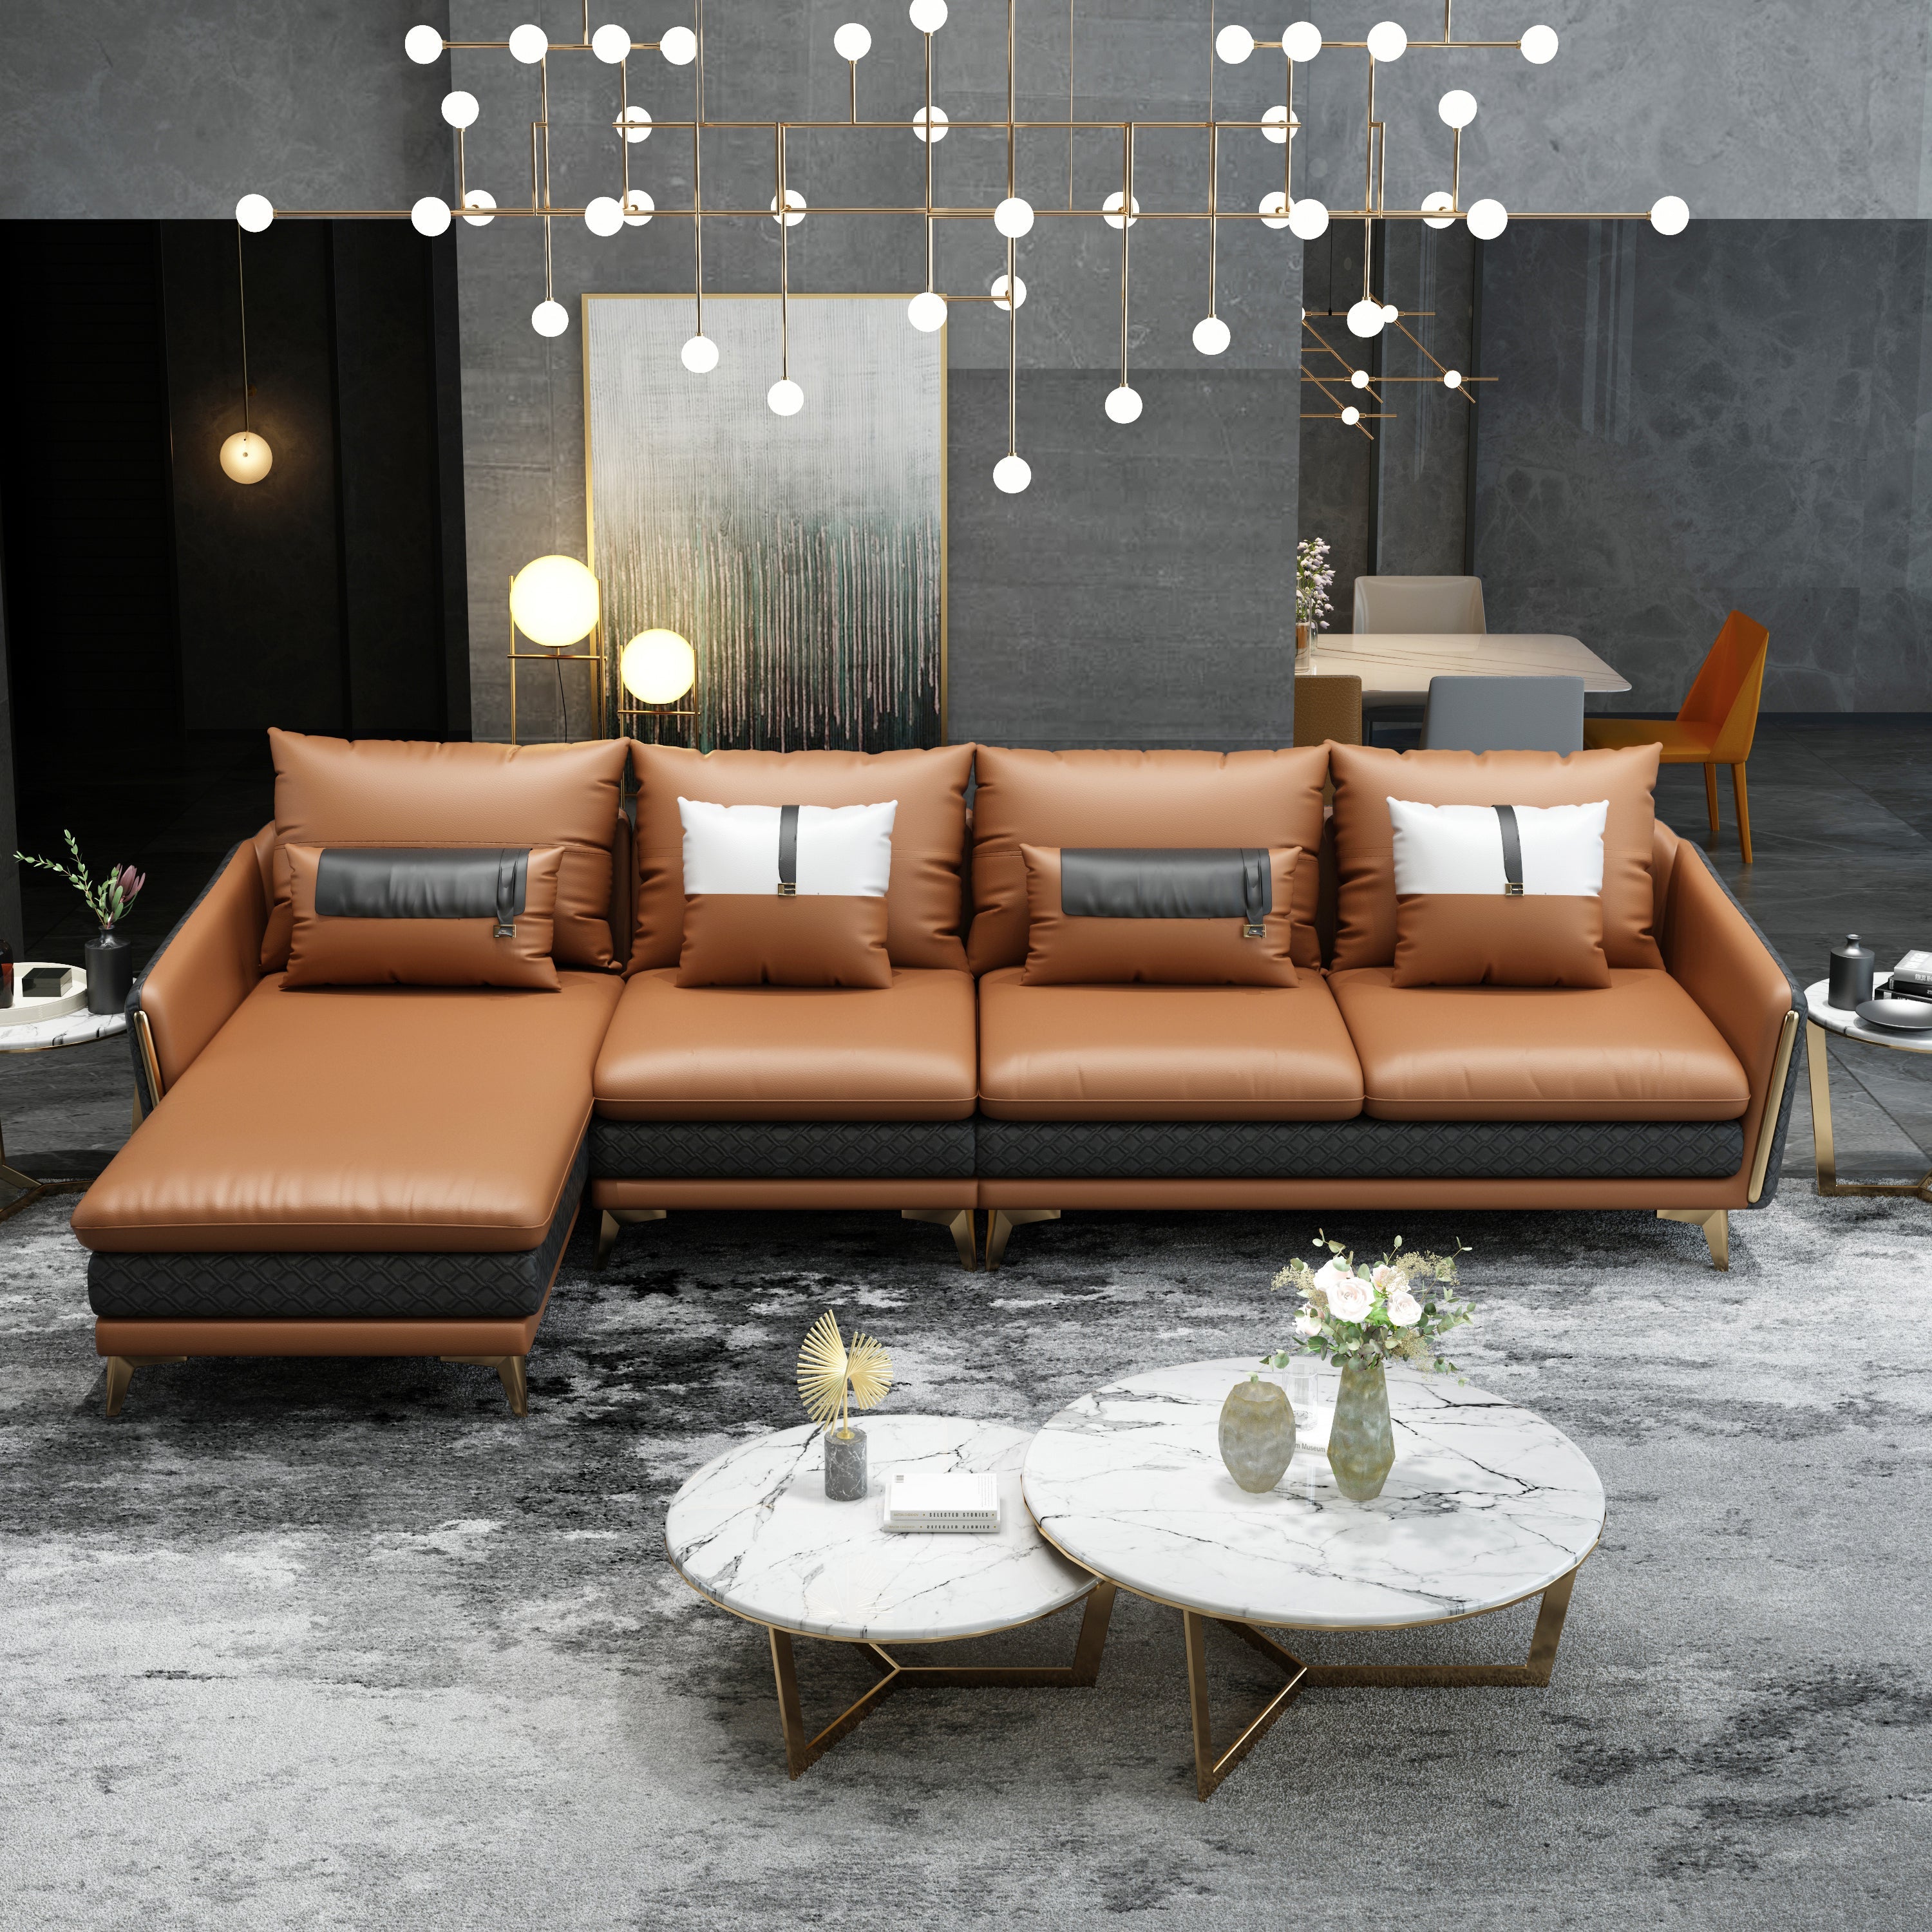 European Furniture - Icaro LHF Sectional Cognac & Gray Italian Leather - EF-64431L-4LHF - New Star Living